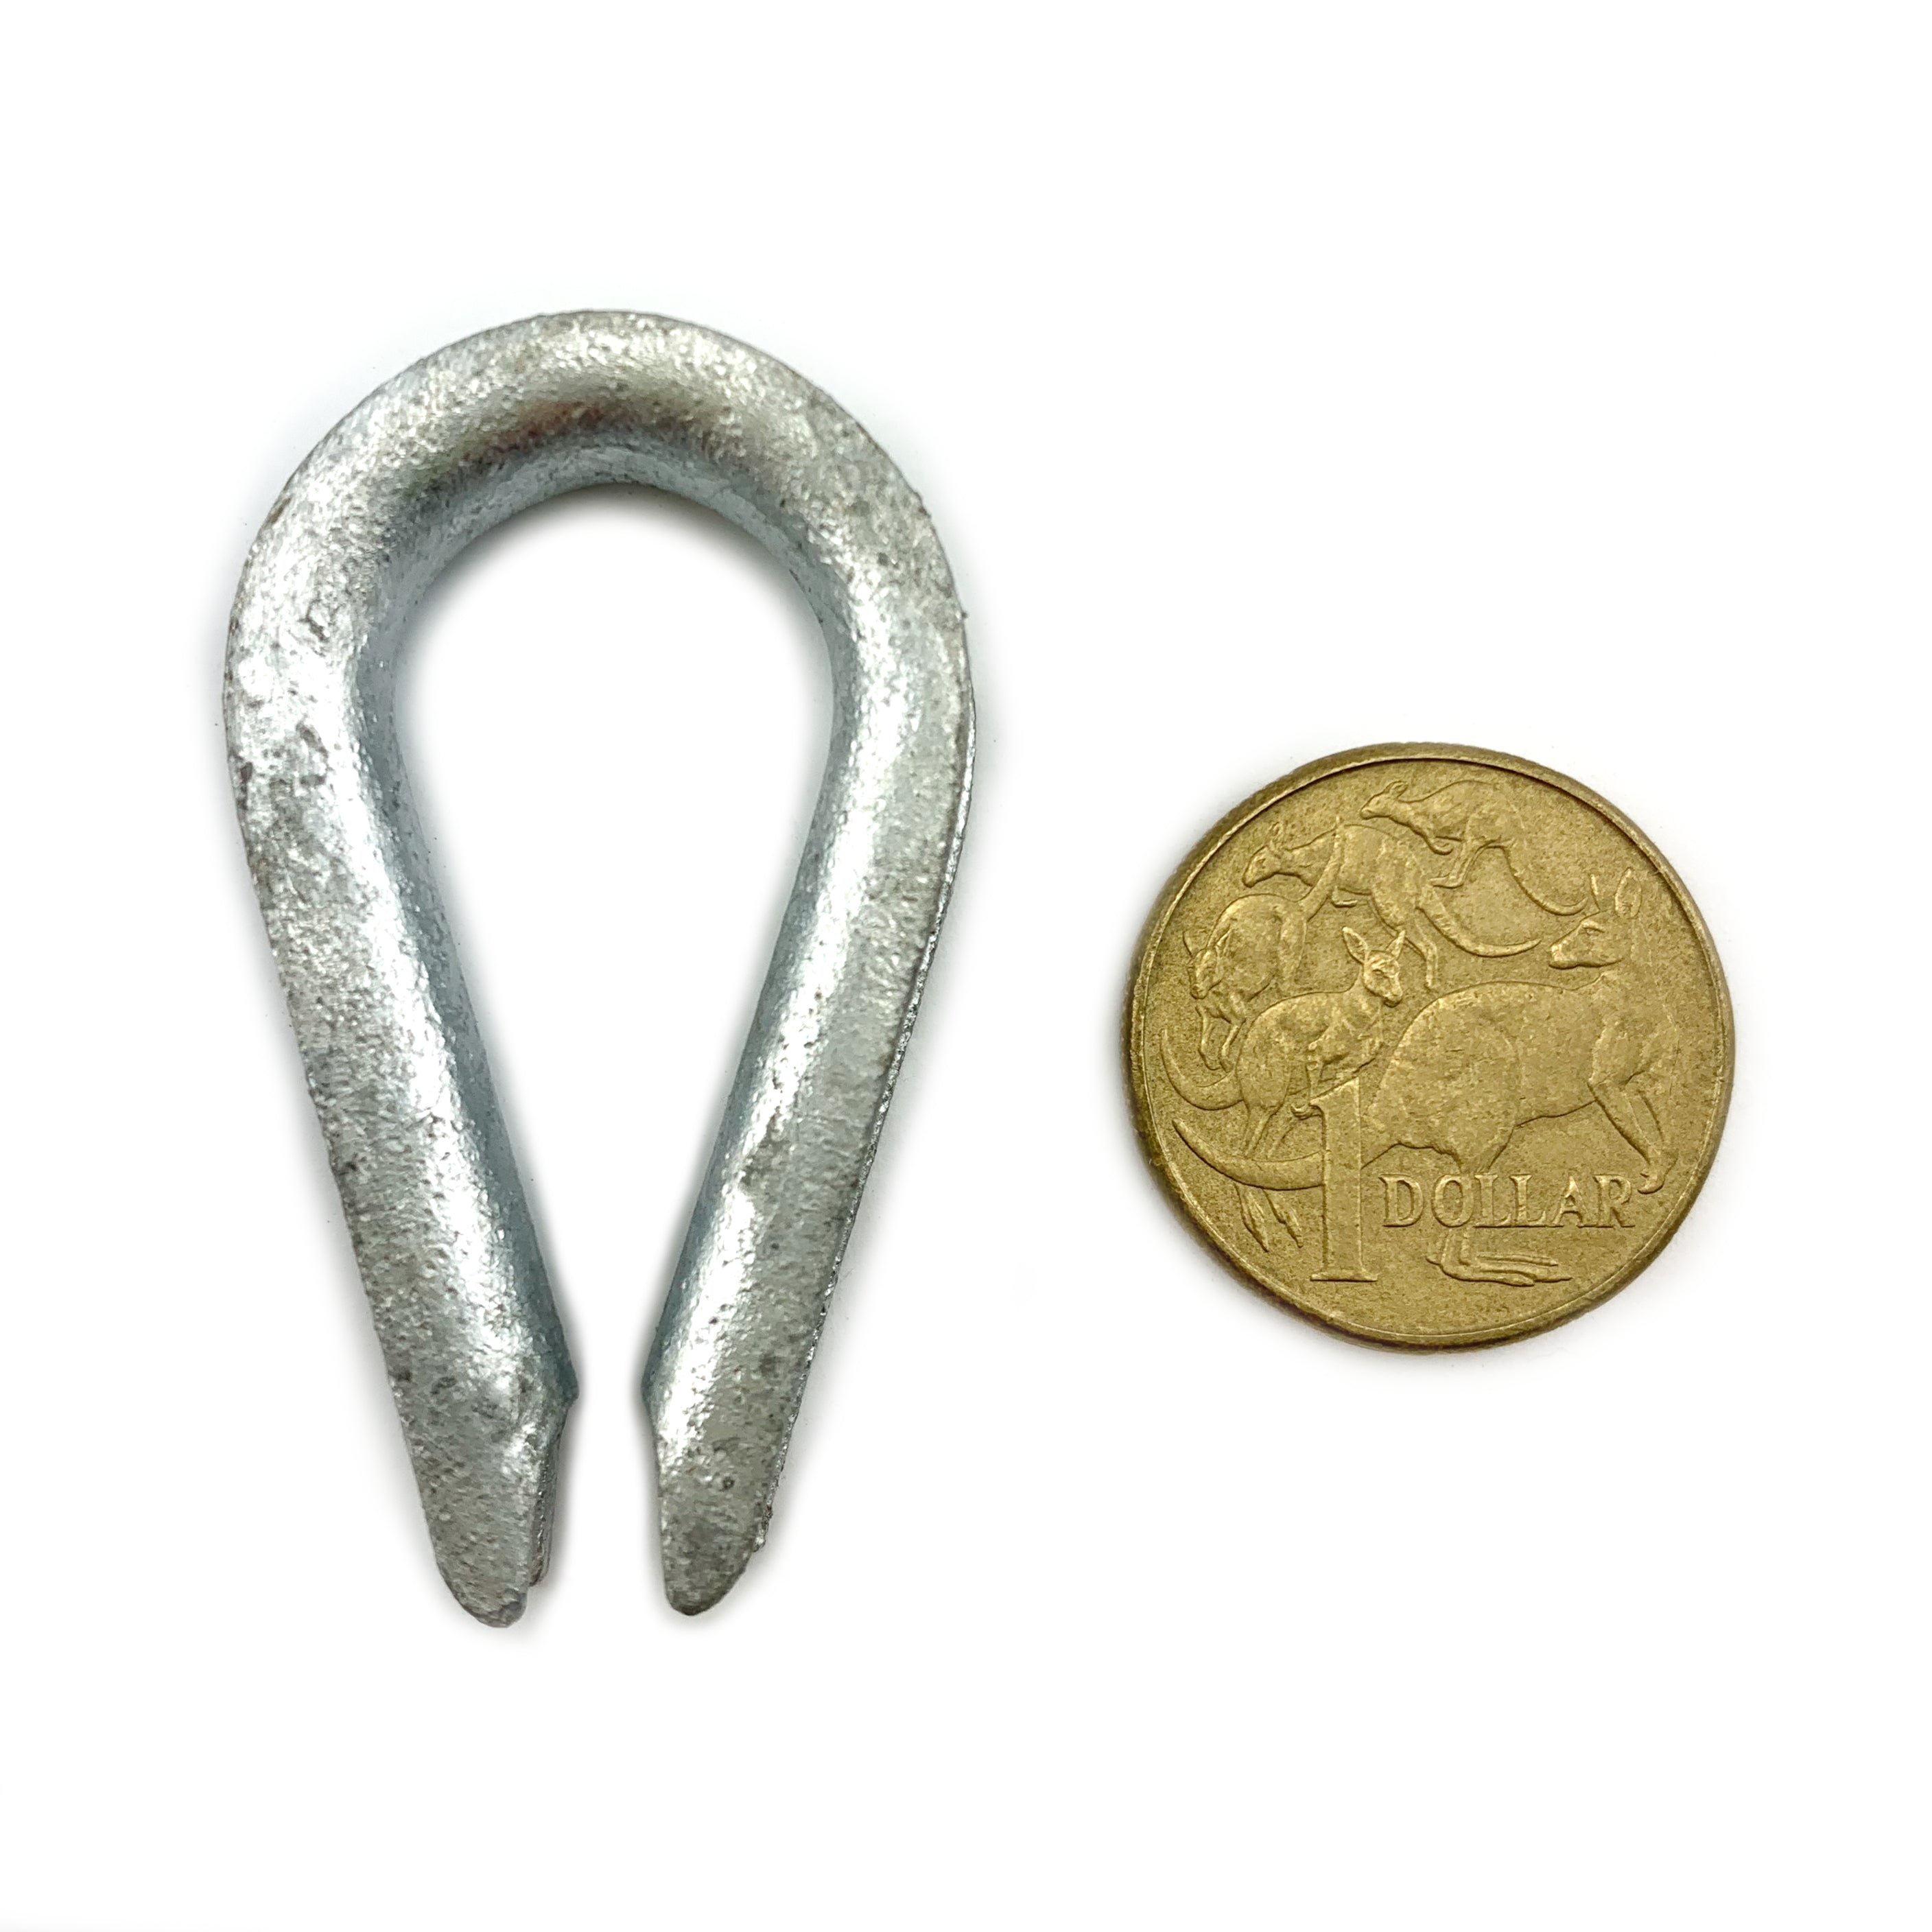 Galvanised thimble, size 4mm. Australia